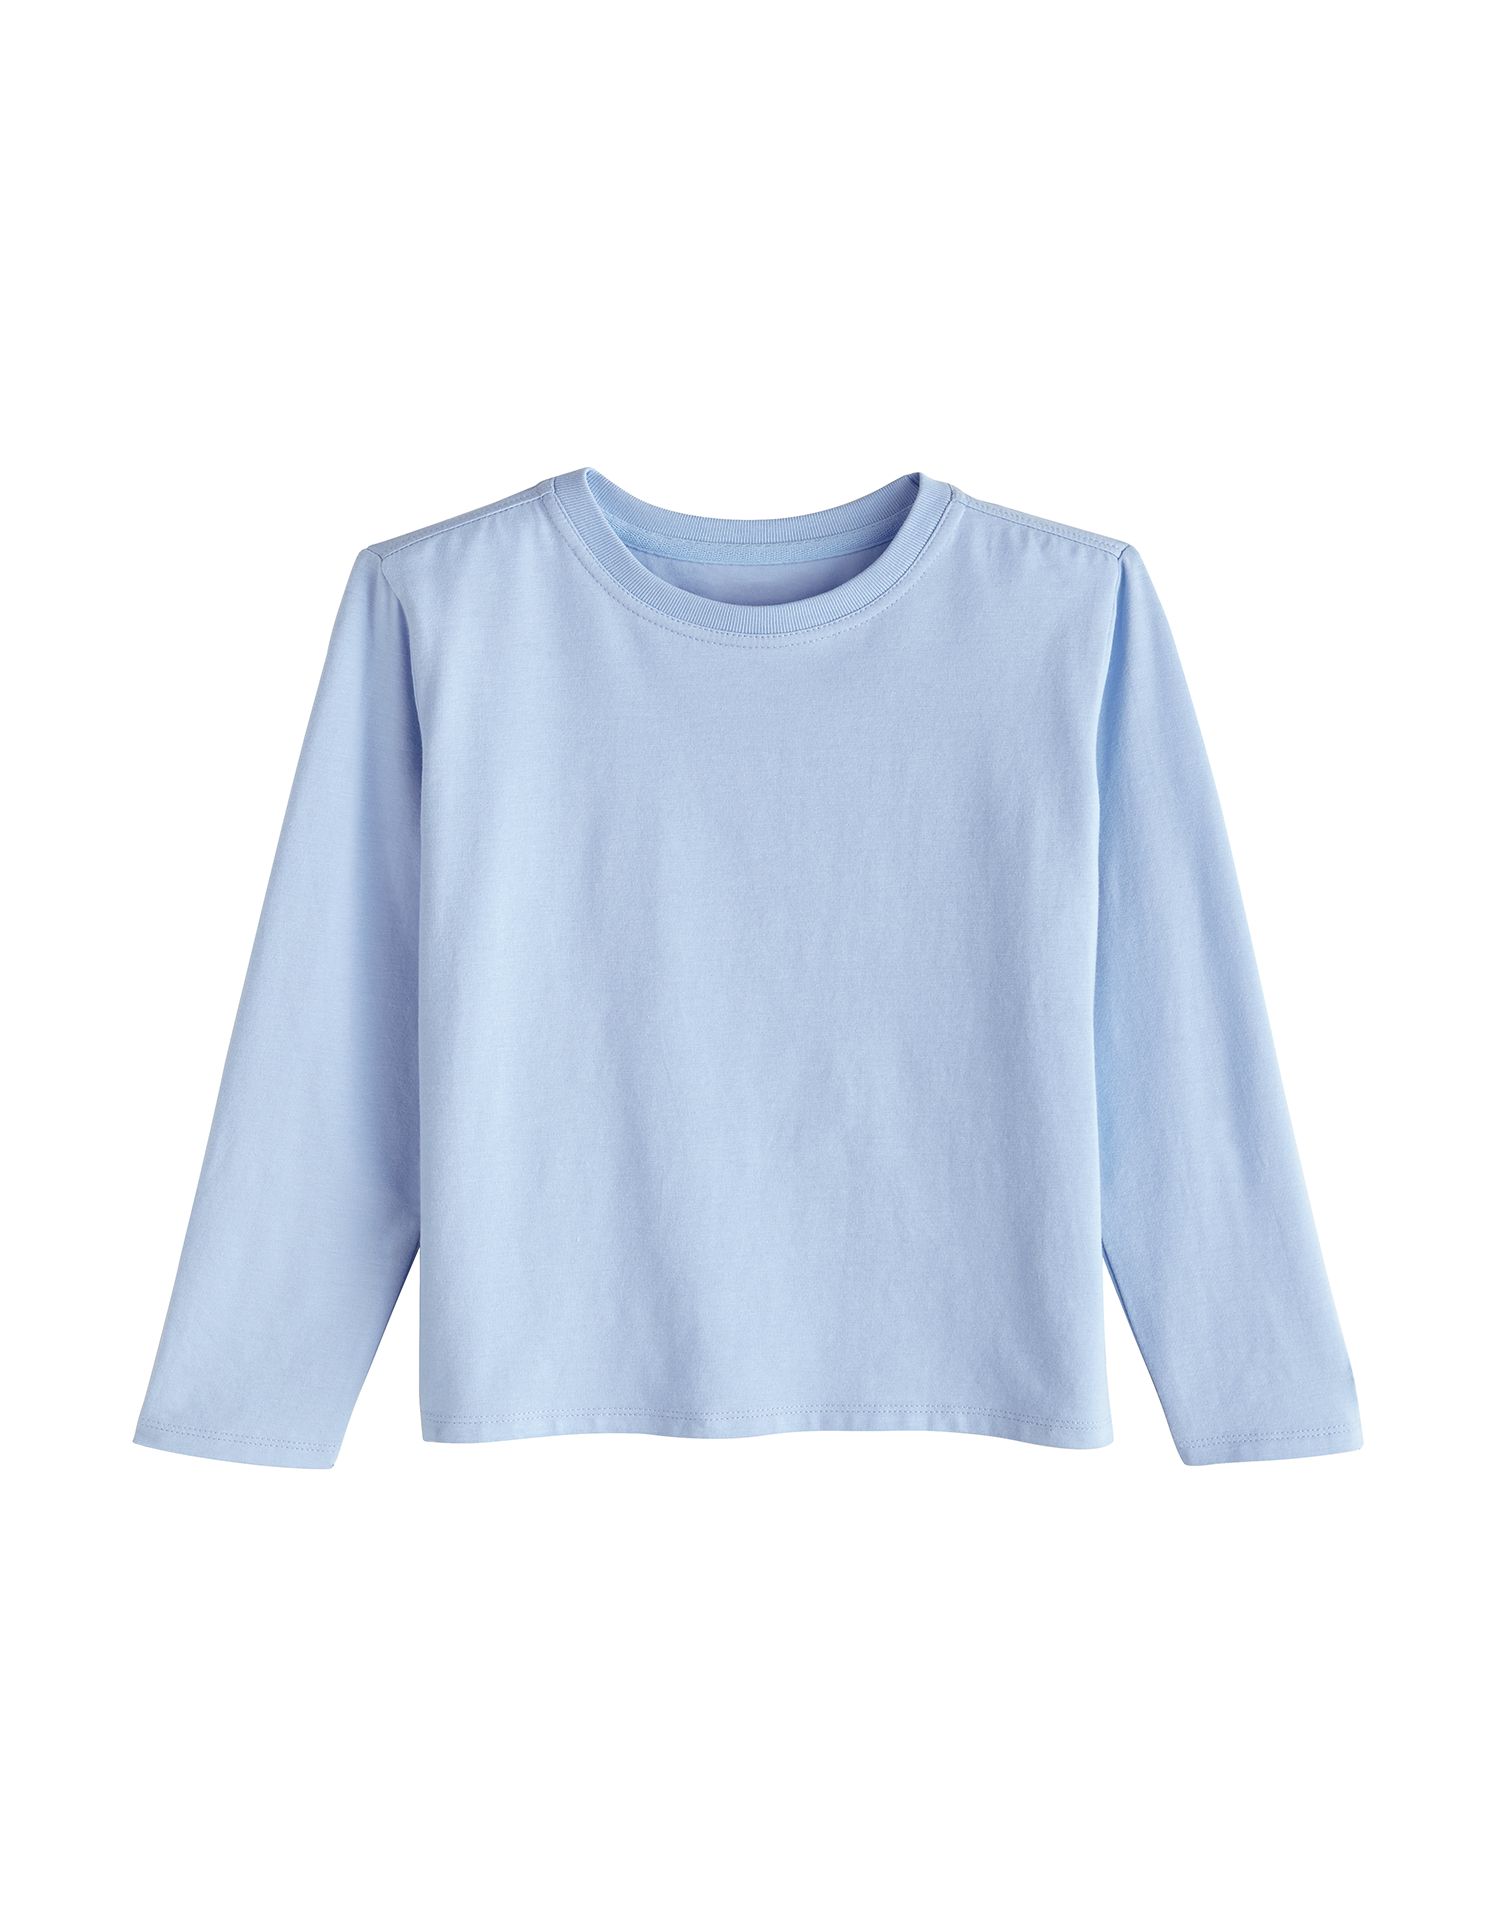 Coolibar - UV Shirt für Kleinkinder - Langarmshirt - Coco Plum - Vintage Blue